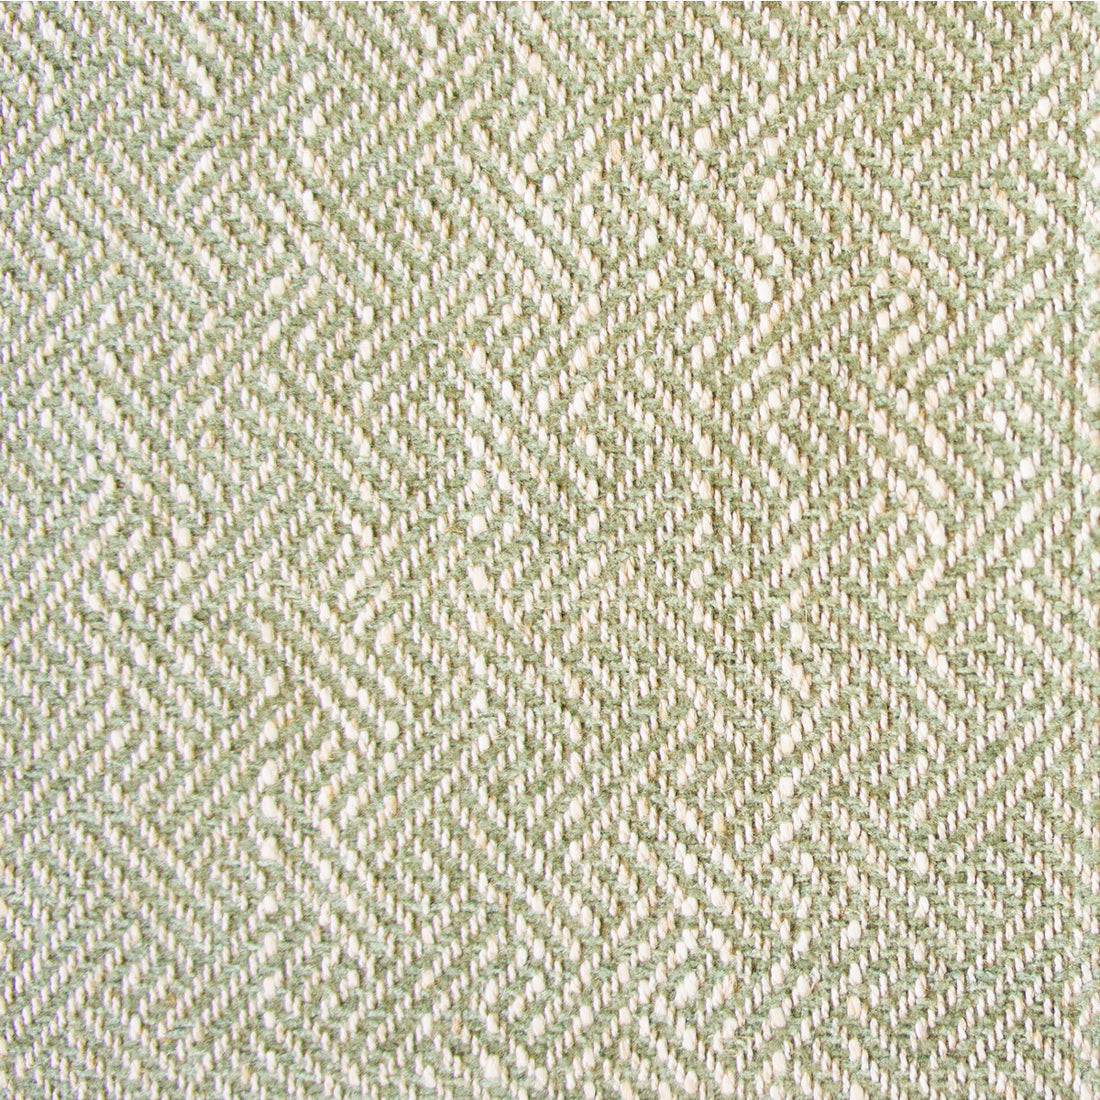 Enea fabric in verde claro color - pattern GDT5518.006.0 - by Gaston y Daniela in the Gaston Libreria collection